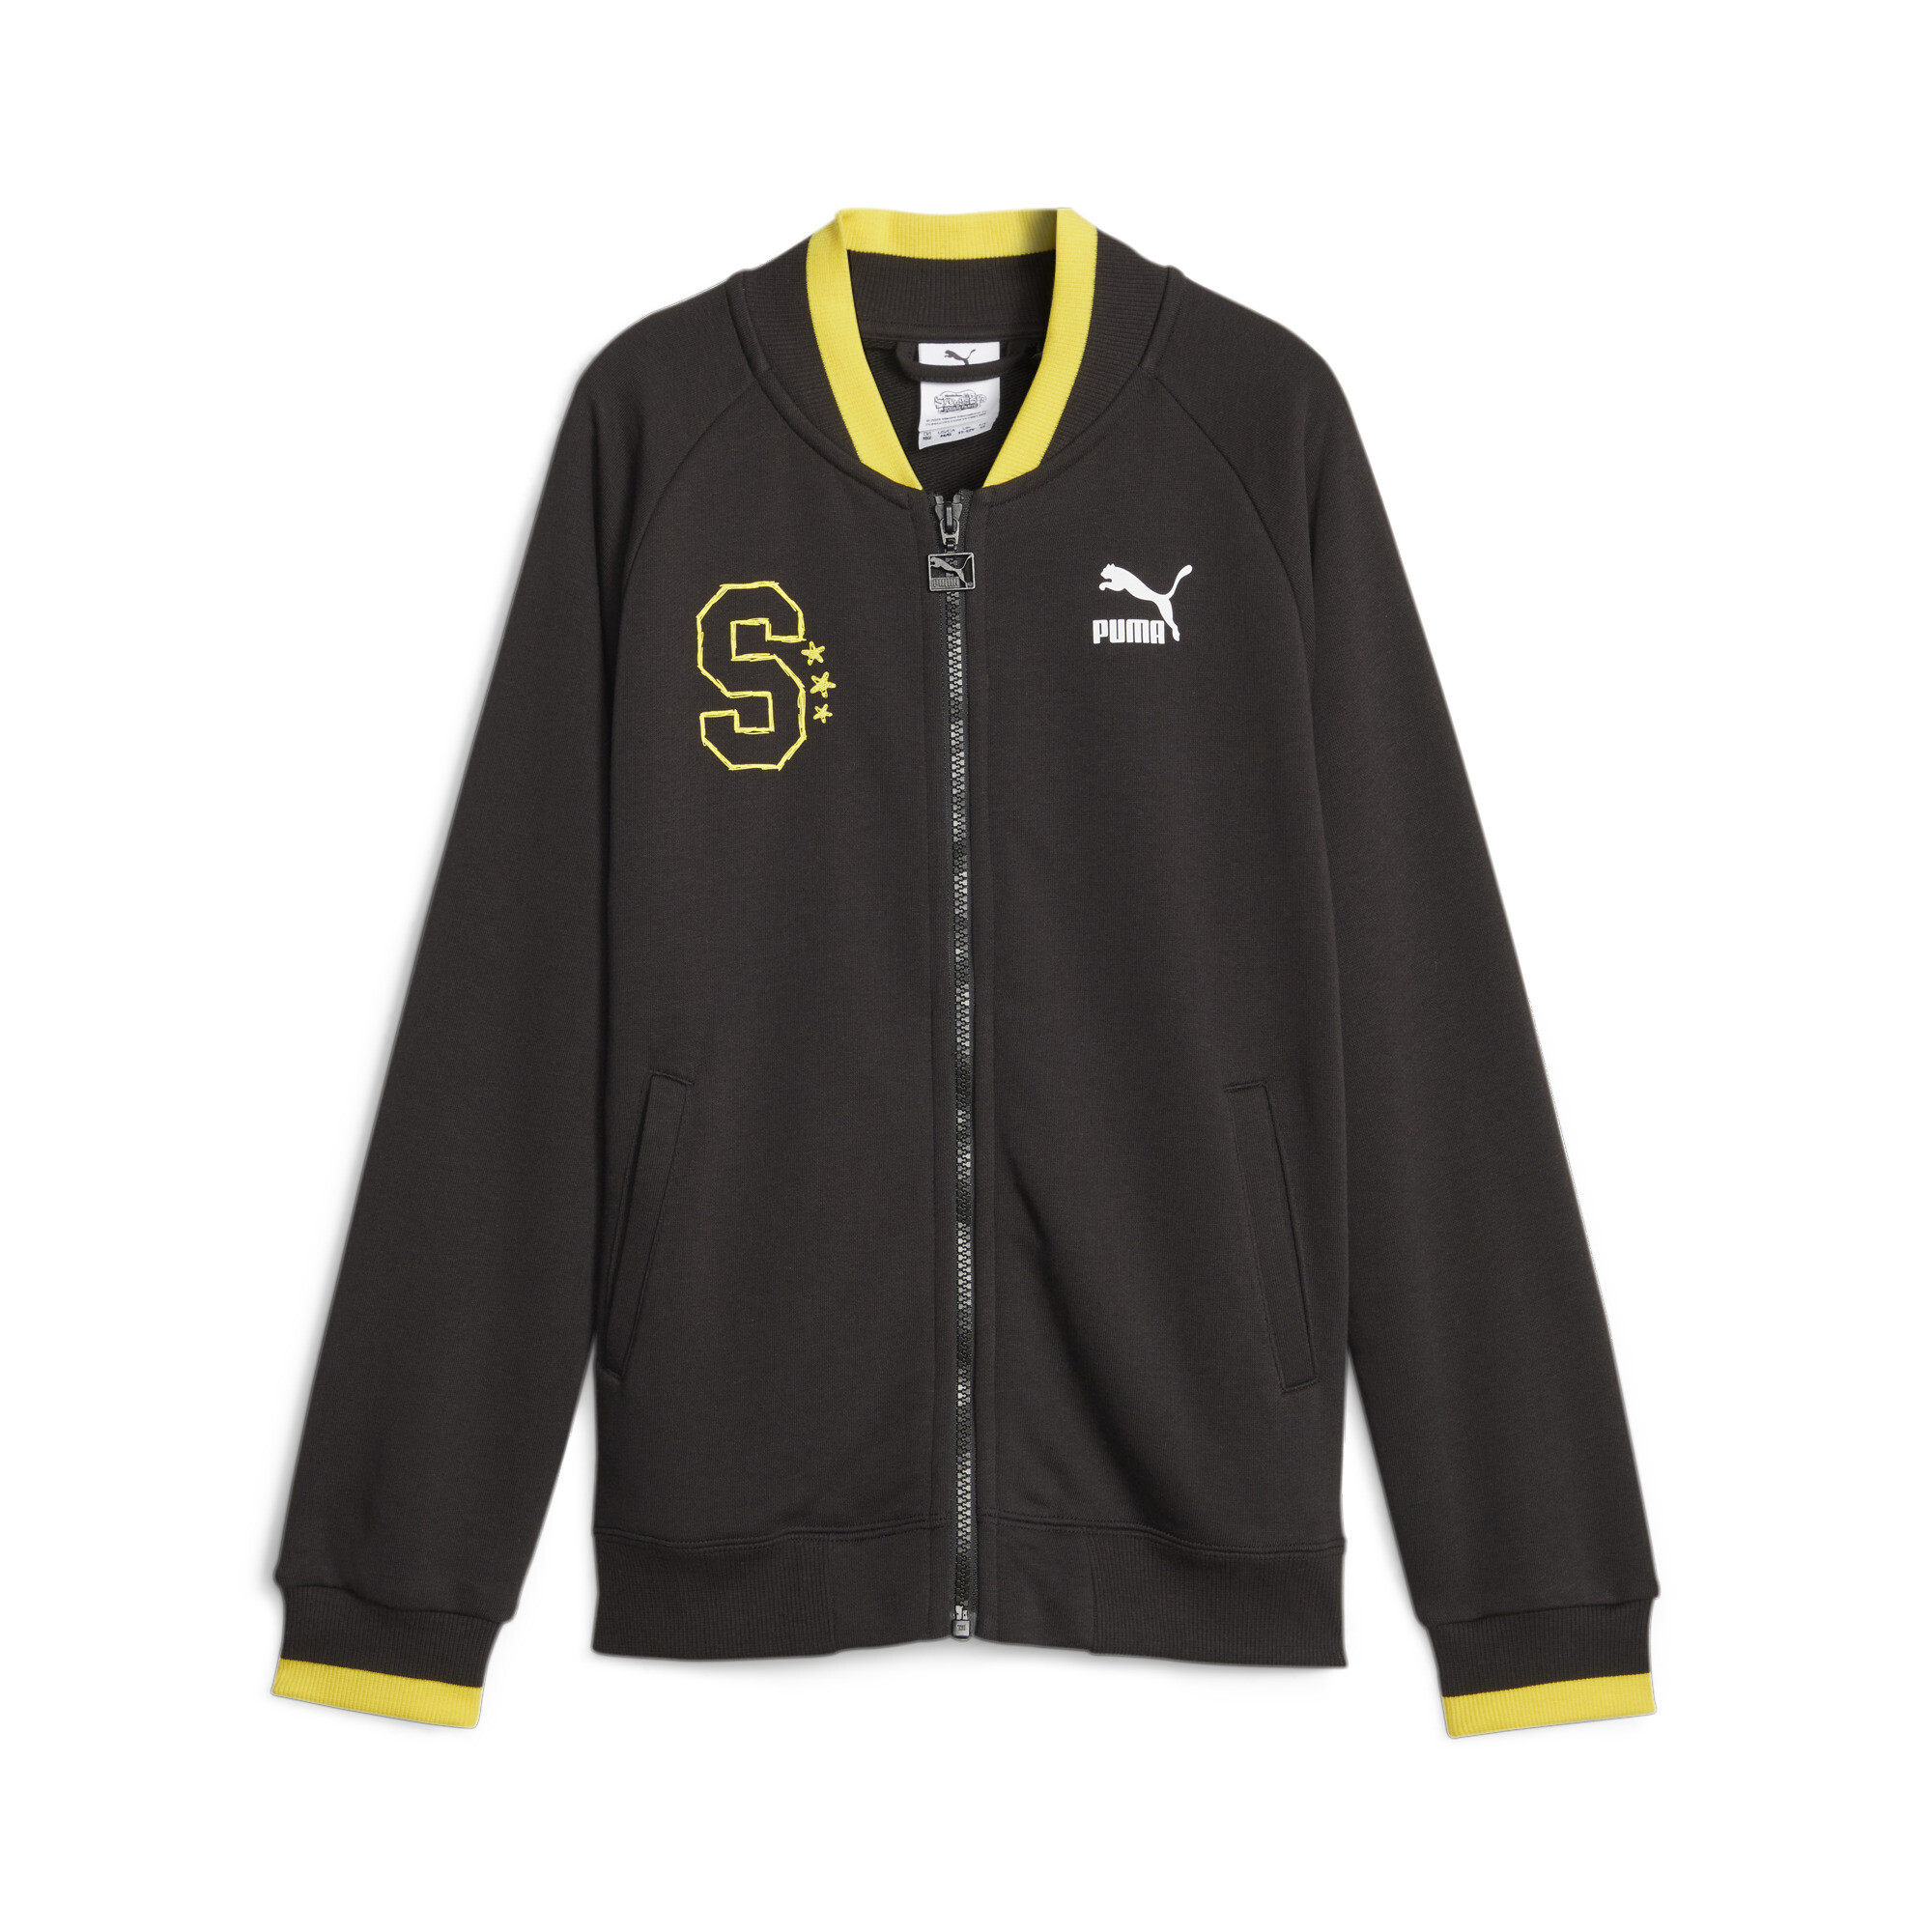 PUMA X SPONGEBOB SQUAREPANTS Jacket In Black, Size 15-16 Youth